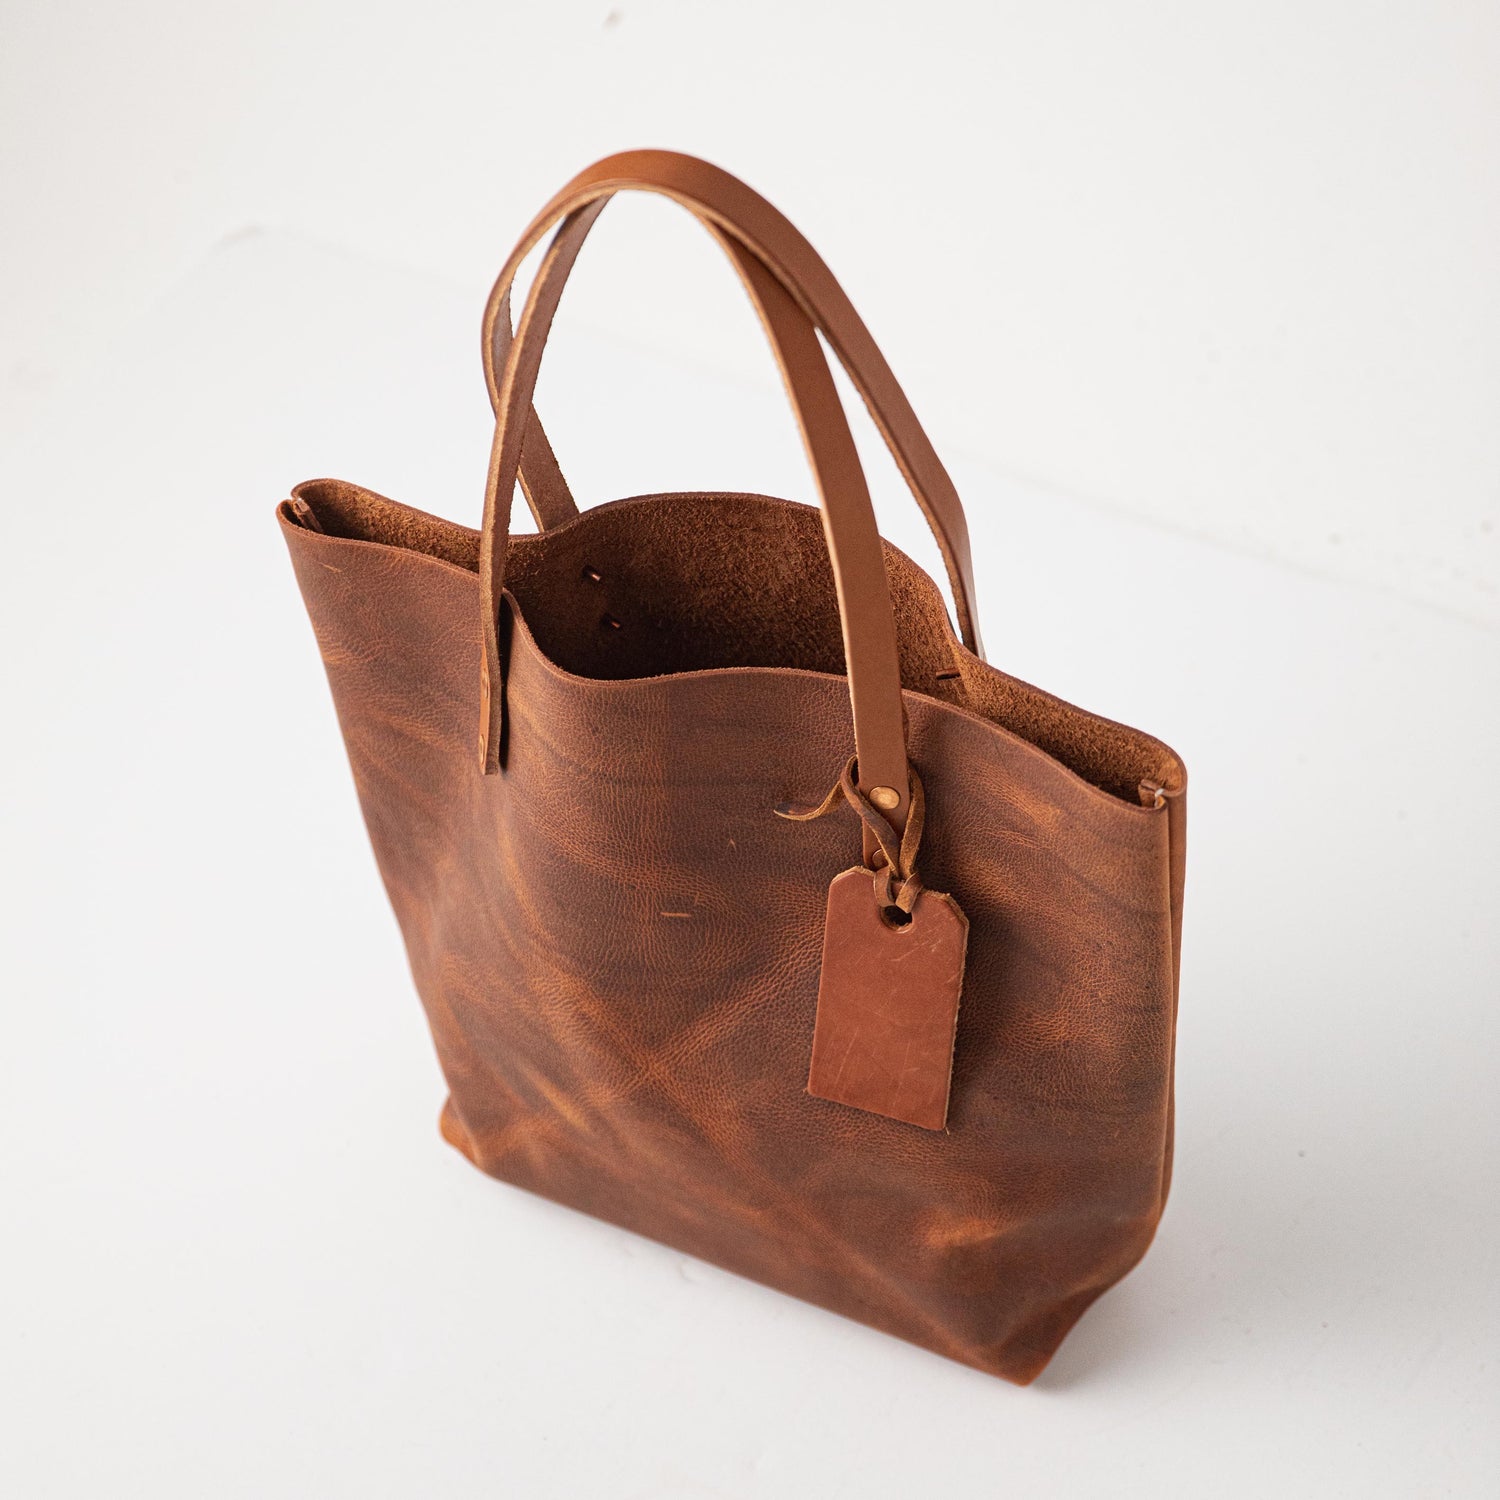 Leather Handbags, Bags